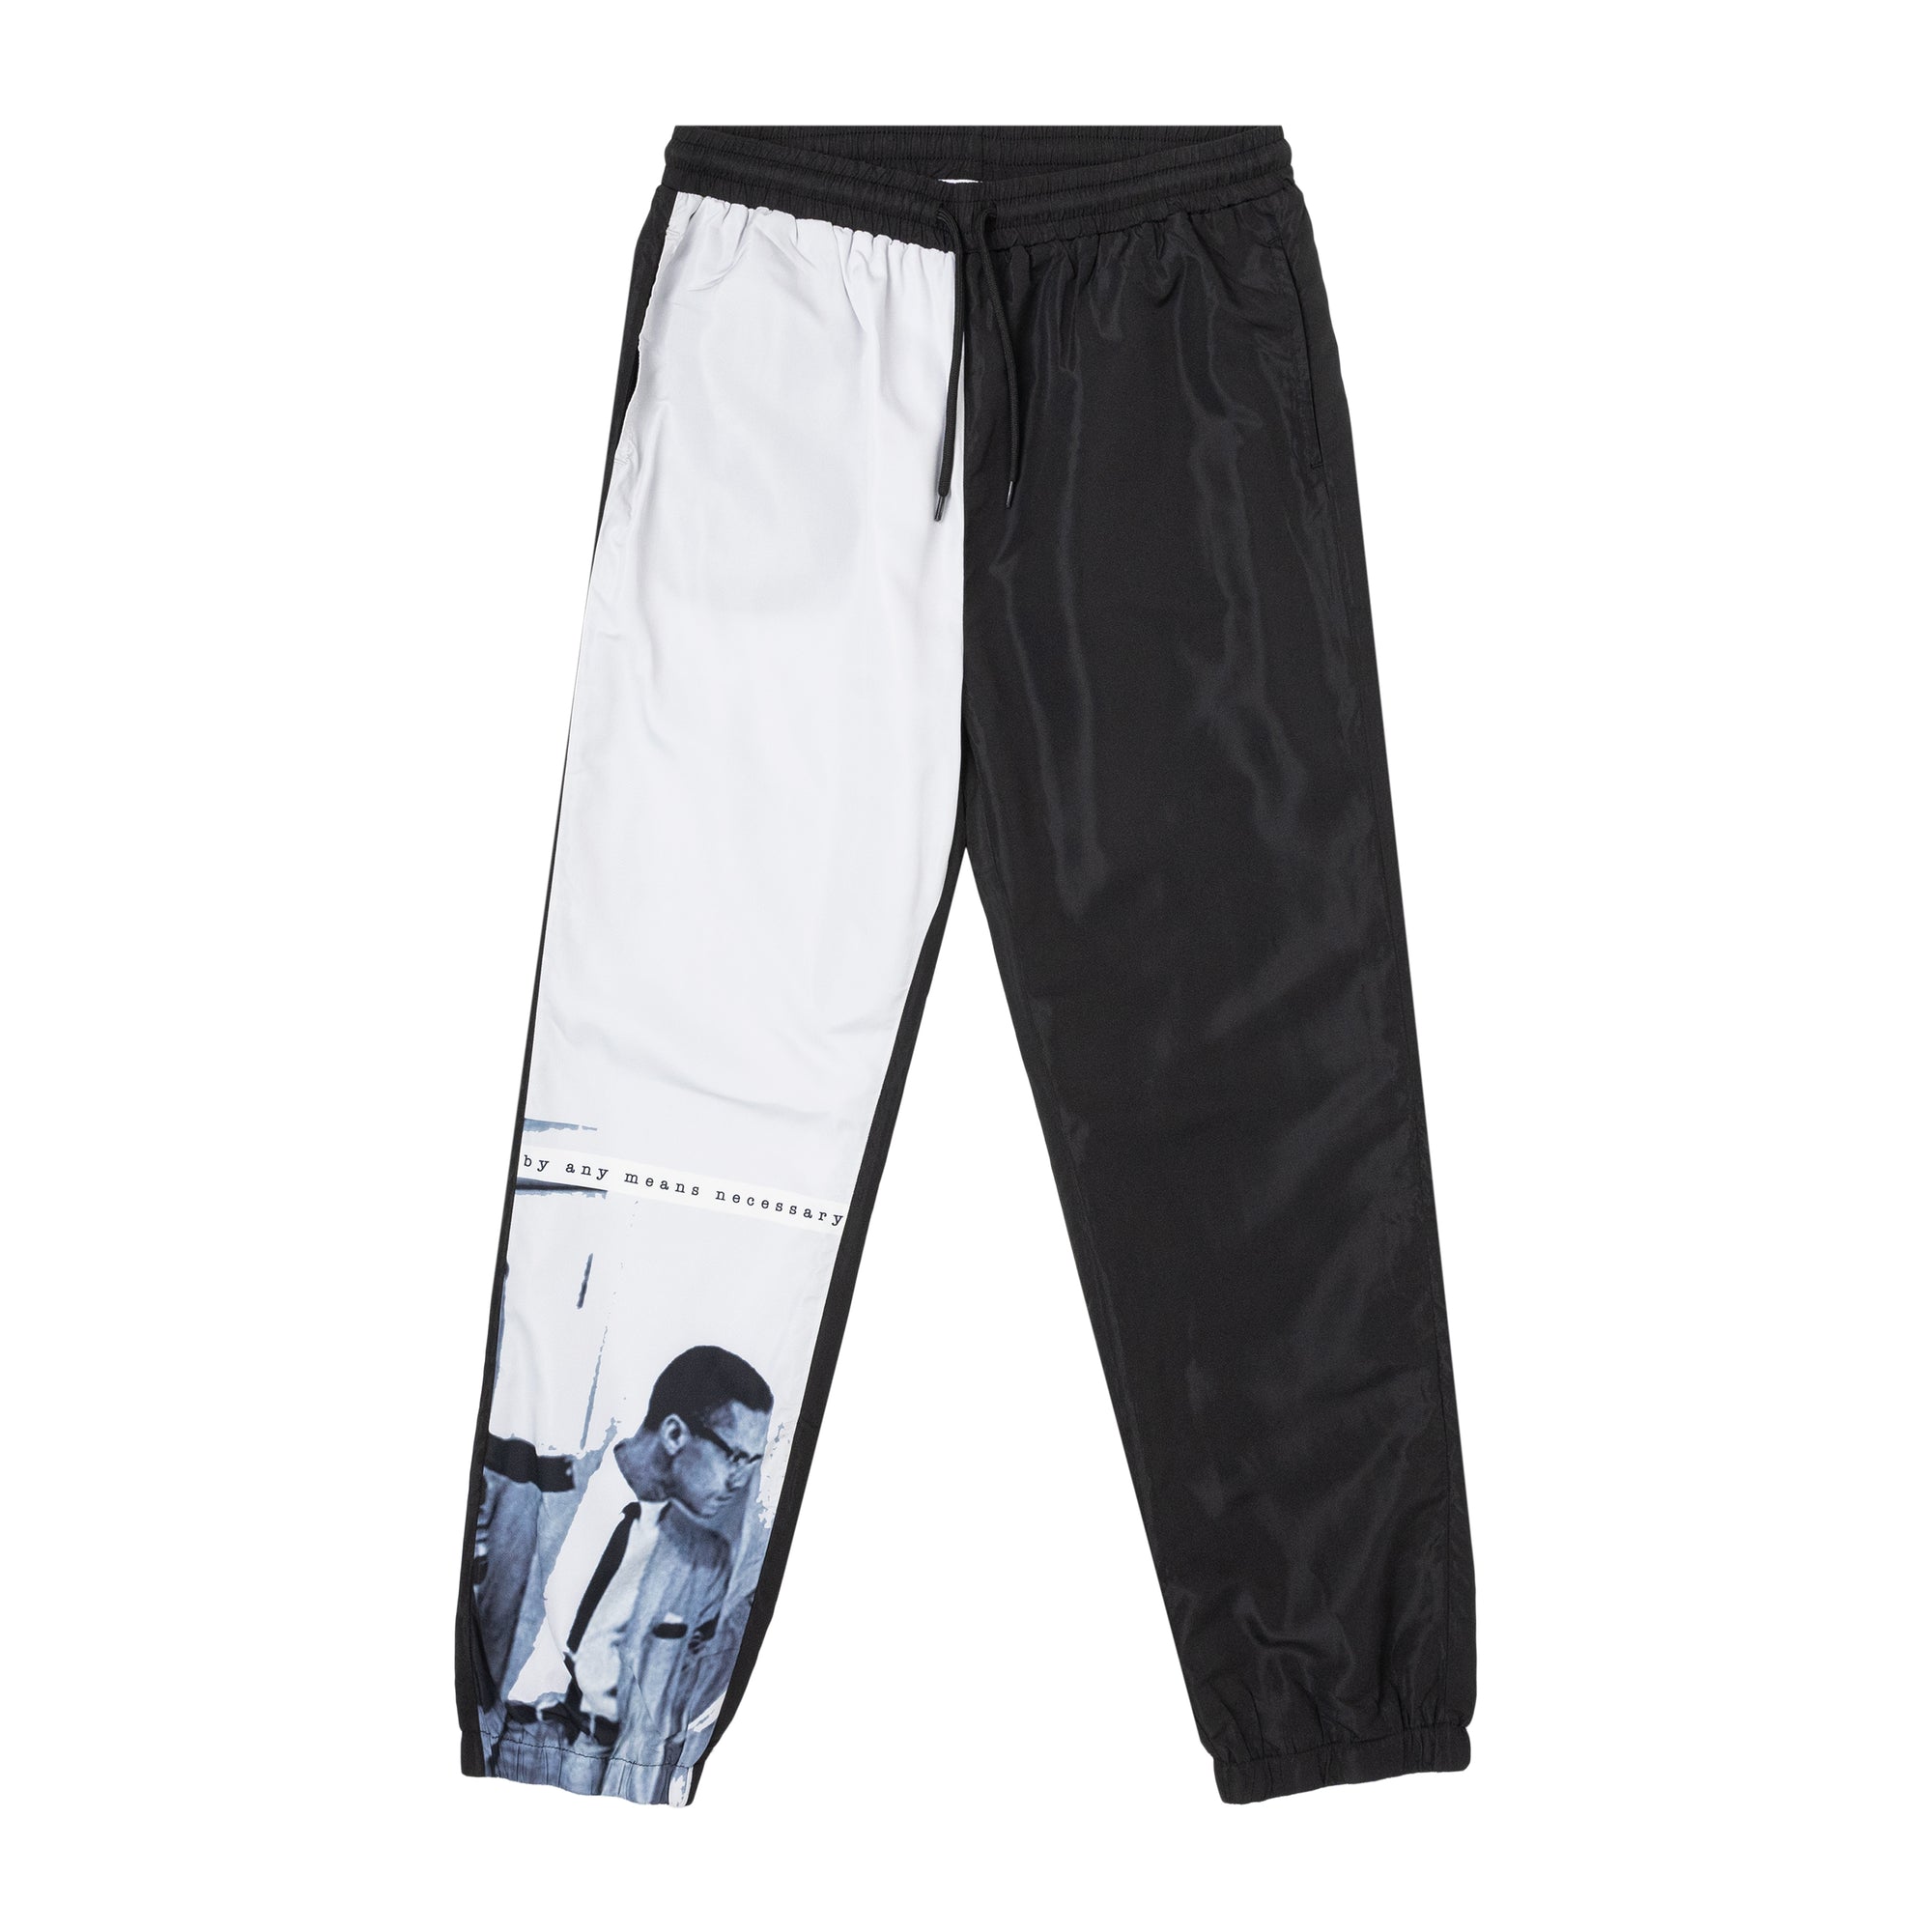 Malcom x Nylon pants black/white